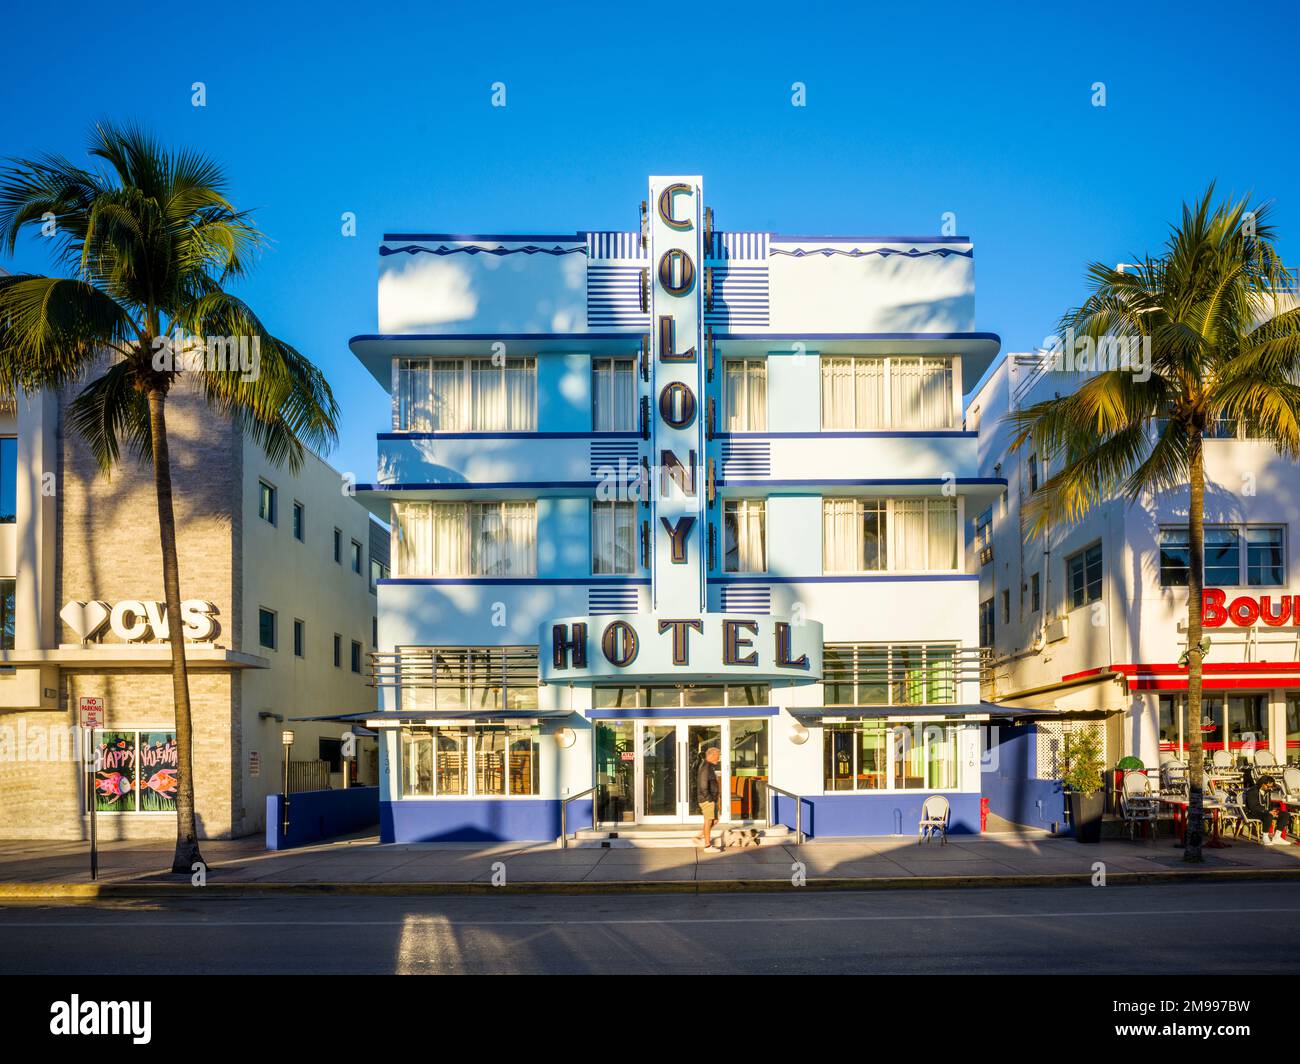 Colony Hotel, Ocean Drive, South Miami Beach, Miami, Floride, États-Unis Banque D'Images